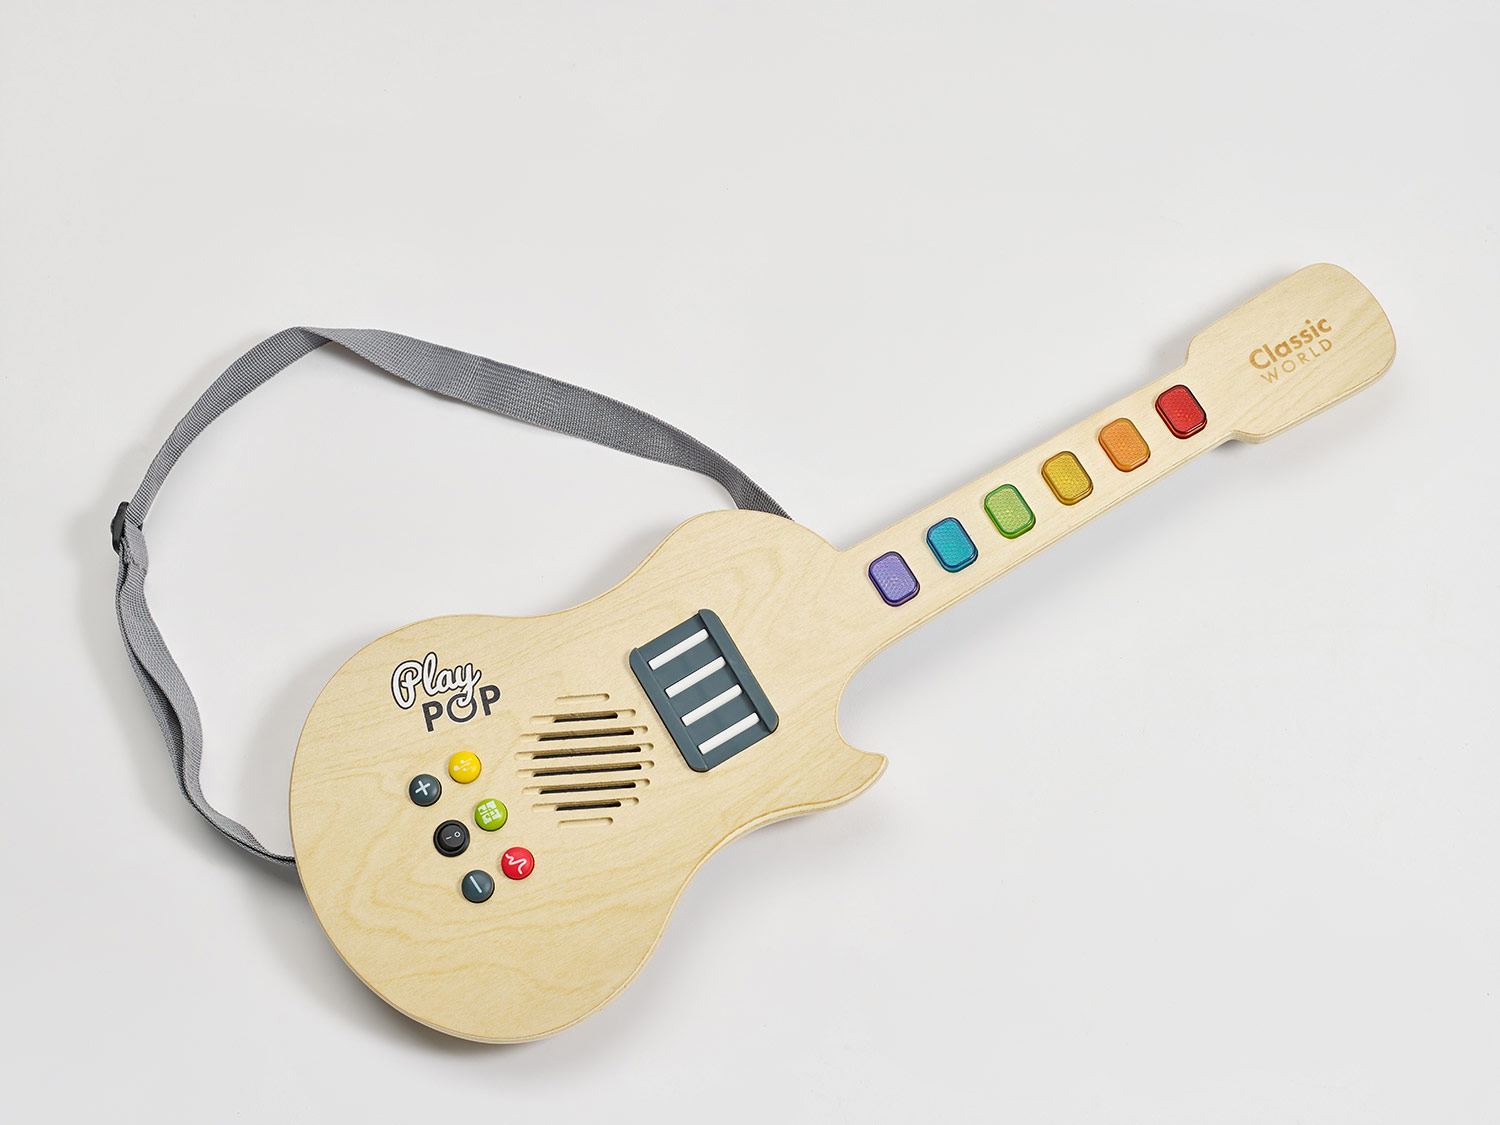 Electric Glowing Guitar